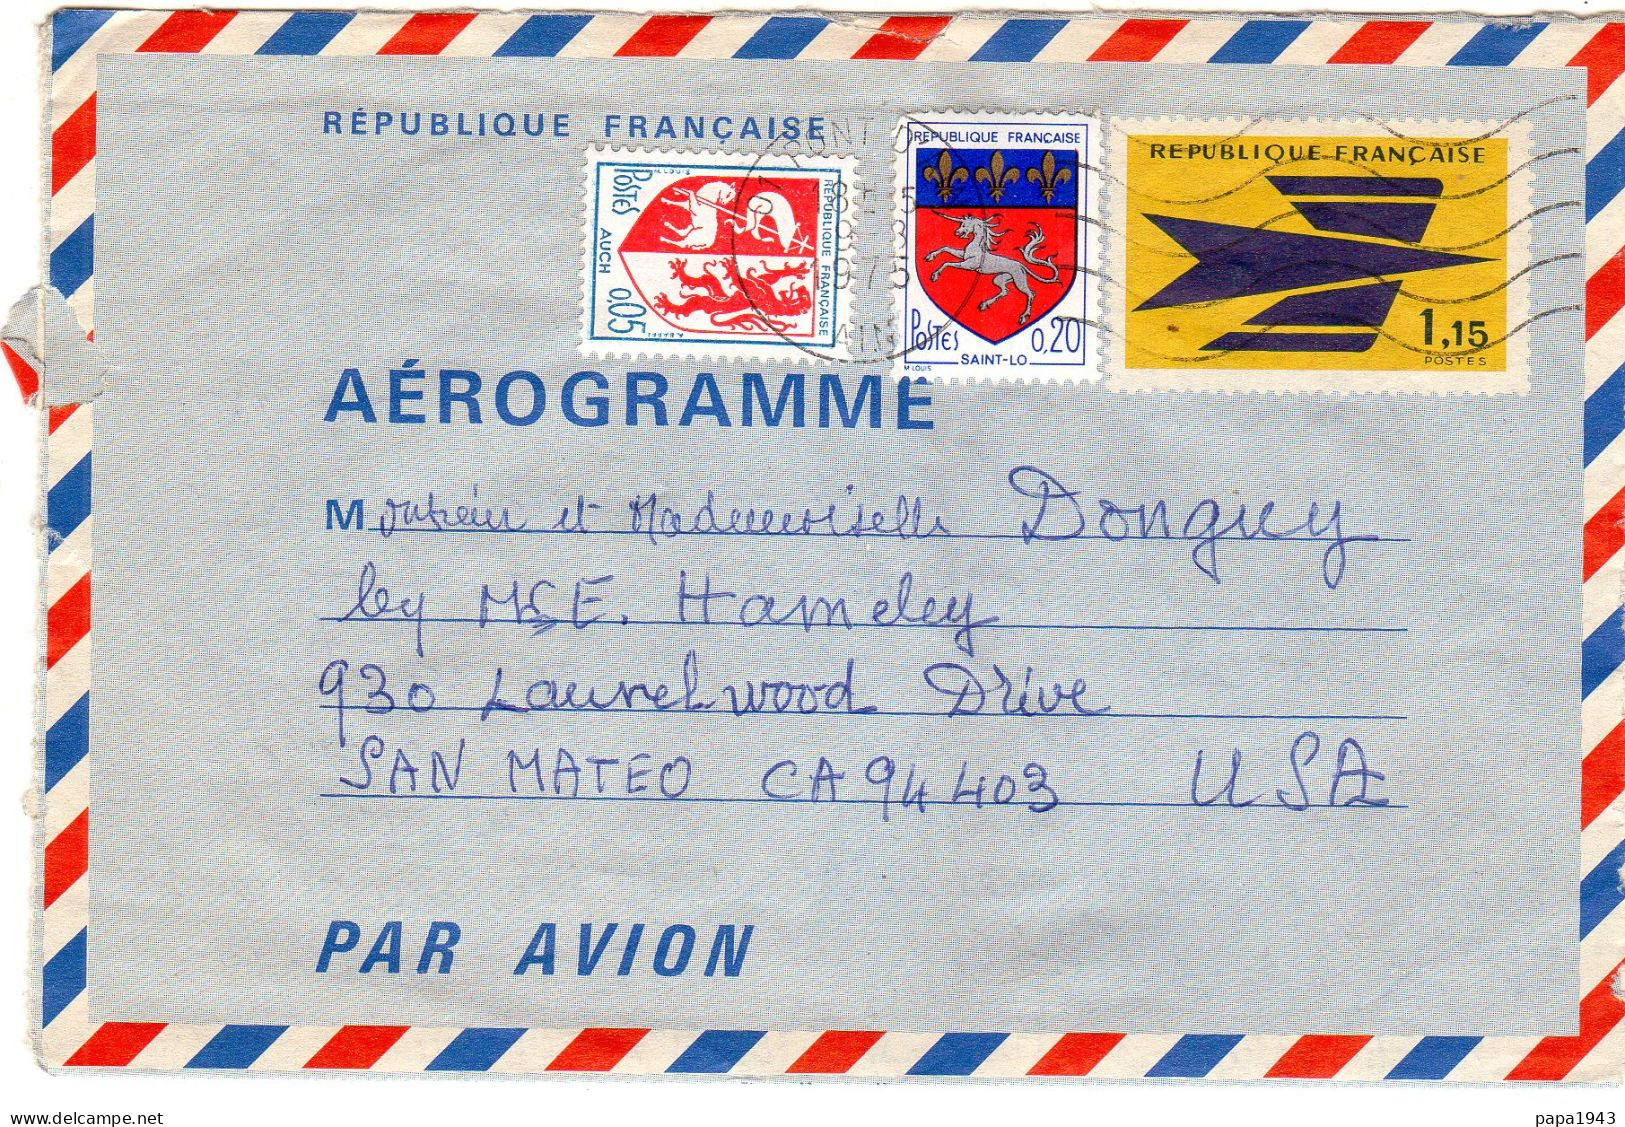 1975  AEROGRAMME  Timbres  Blasons Auch 0,05 + St LO 0,20 + 1,15 Envoyée à SAN MATEO U S A - Aerogrammi